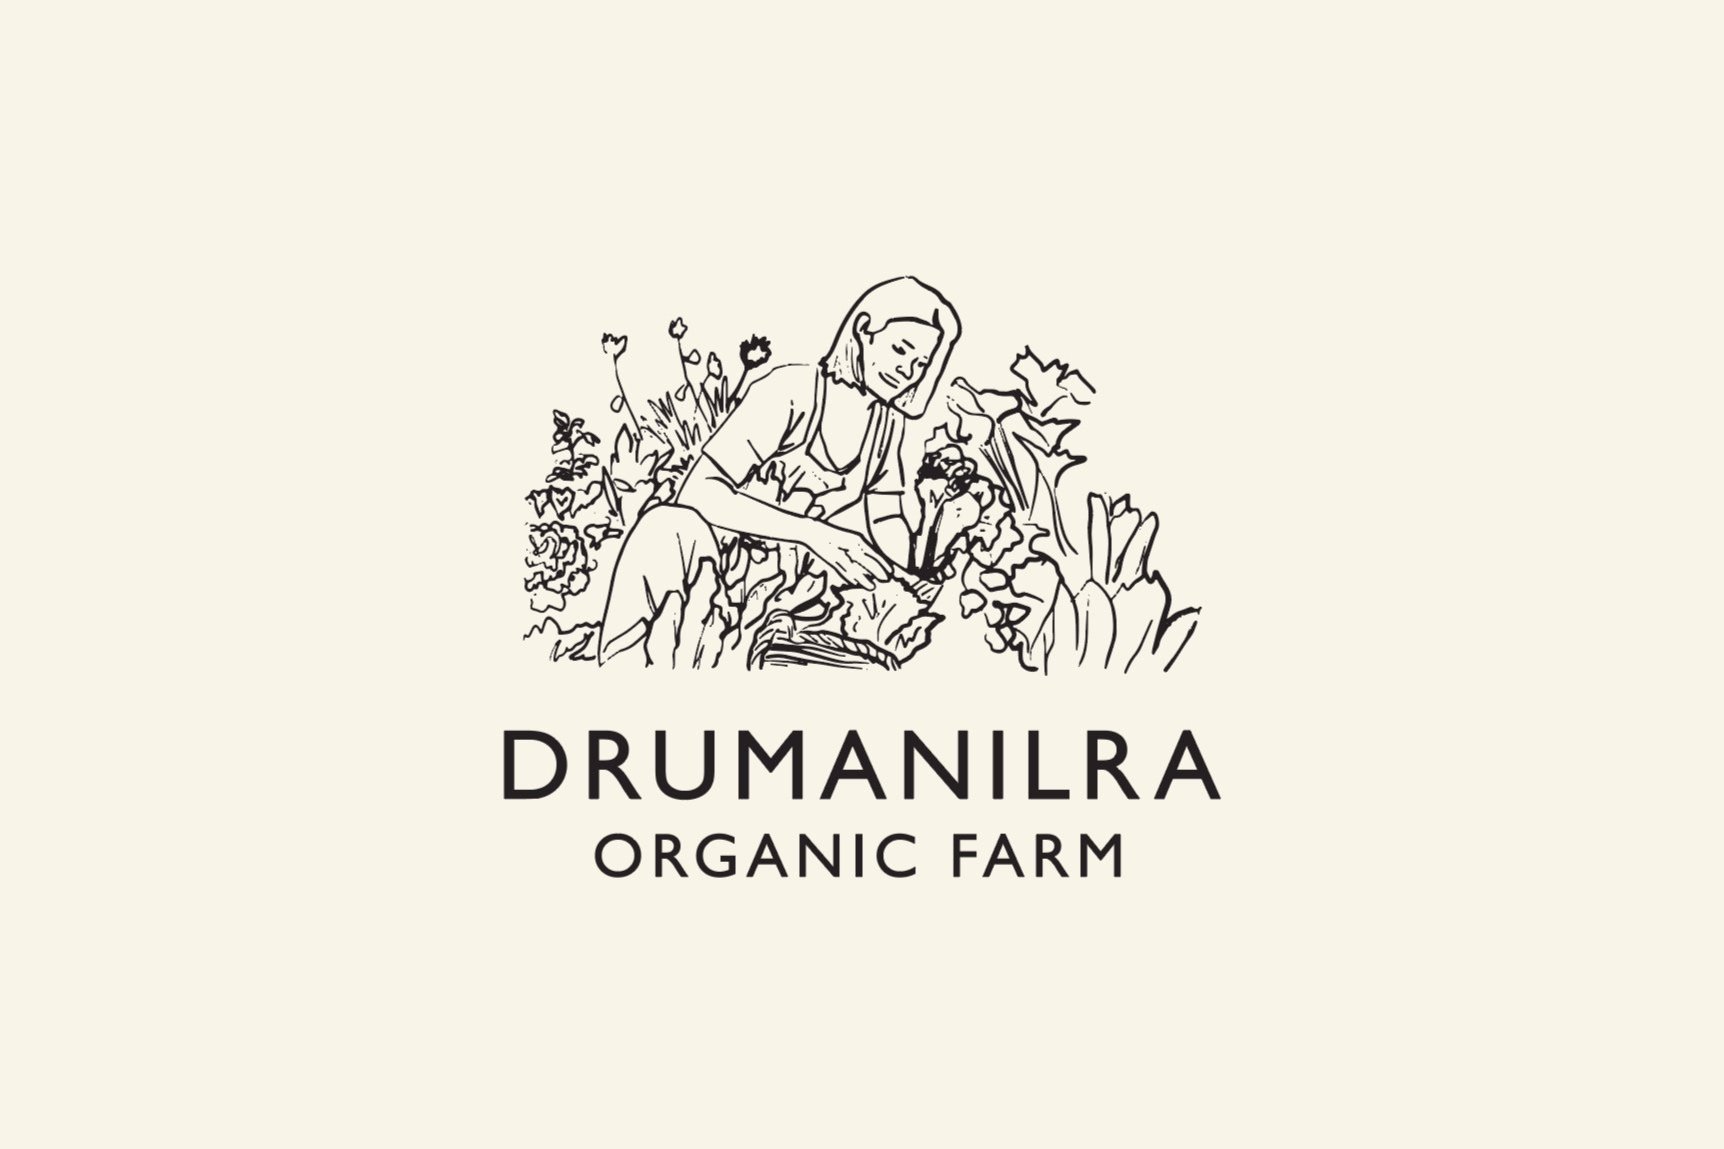 Drumanilra Farm, Complete Branding